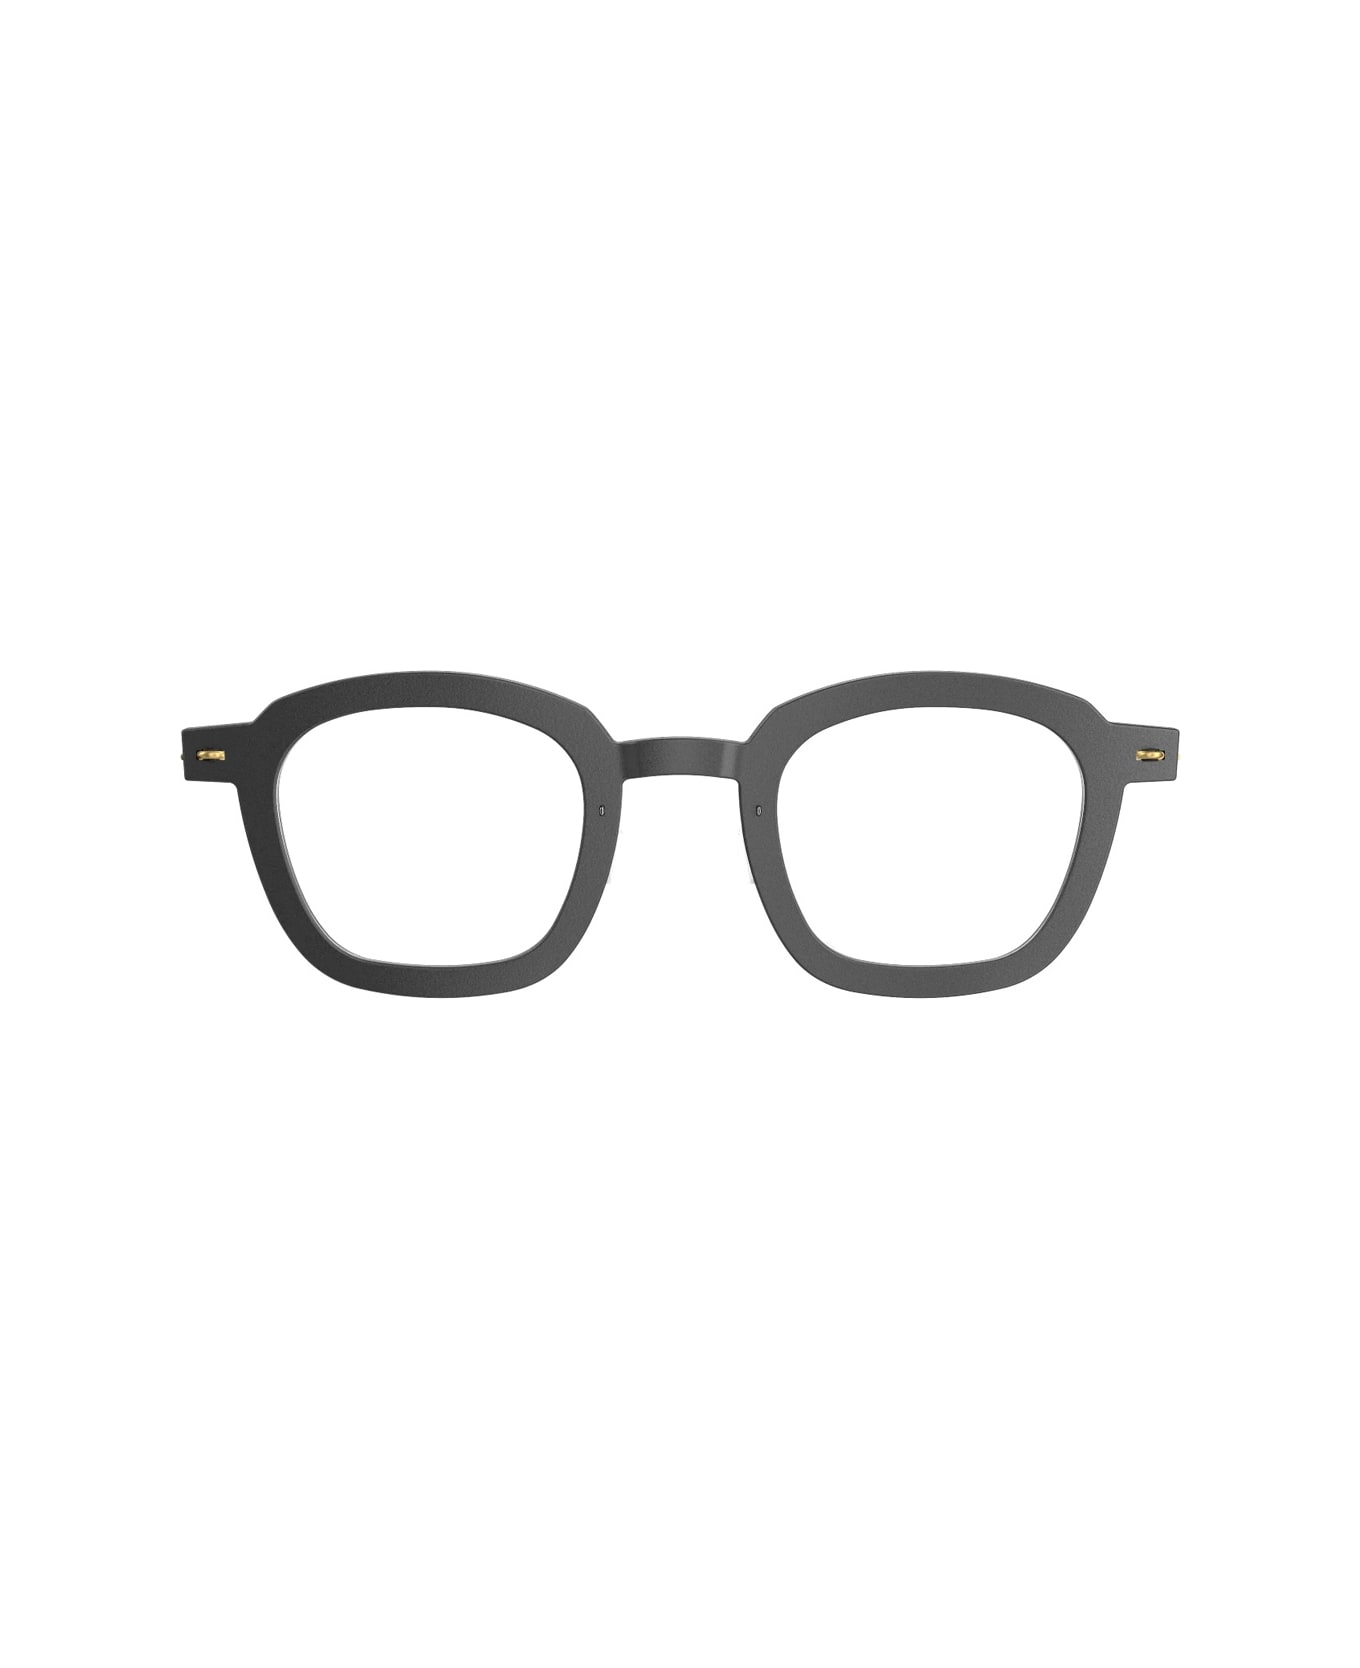 LINDBERG N.o.w. 6587 D16 - Pgt Glasses - Nero